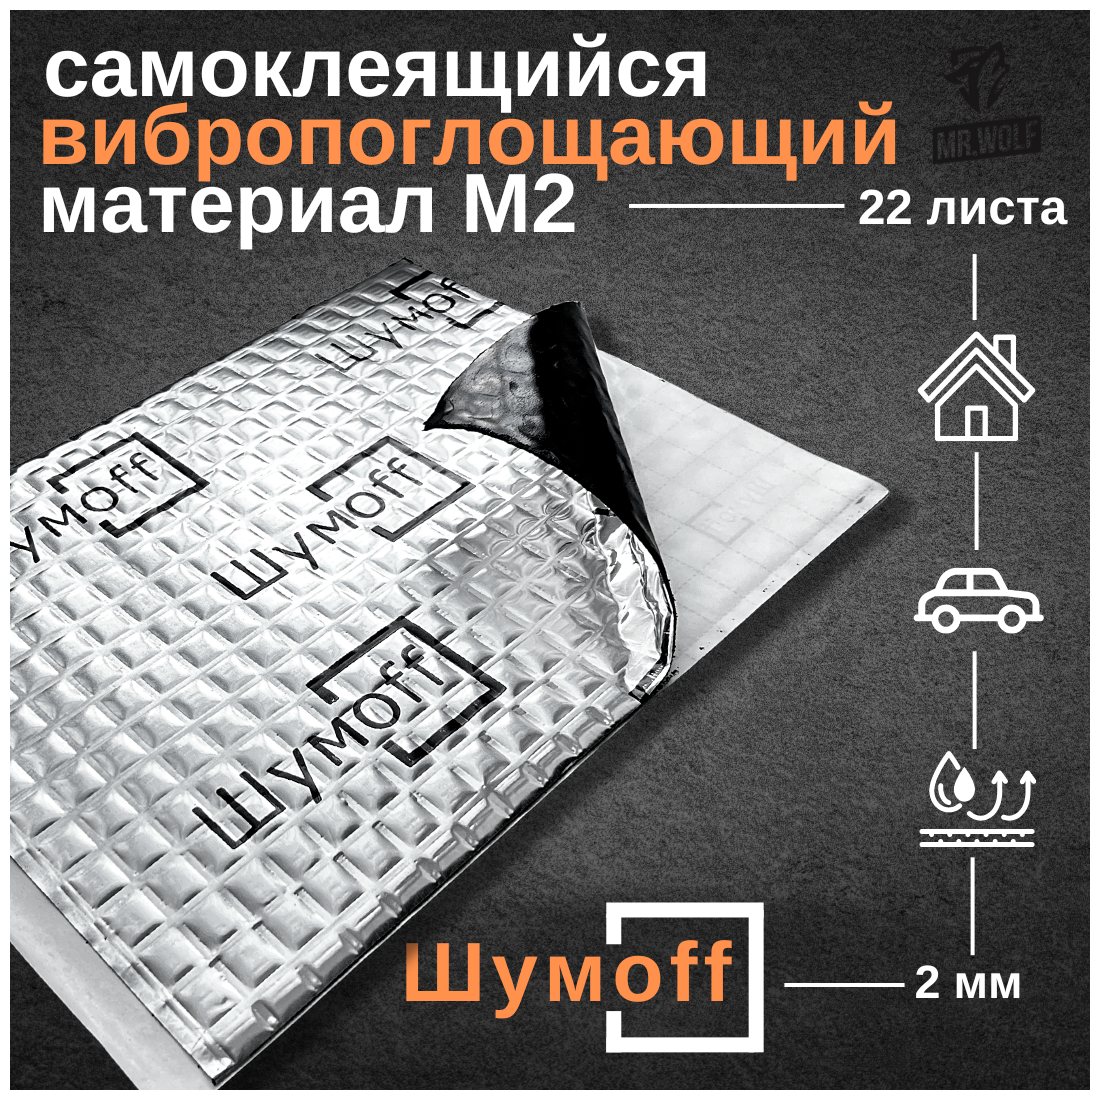 Шумоизоляция для автомобиля виброизоляция шумофф М2 1 лист (0.1 кв. м)